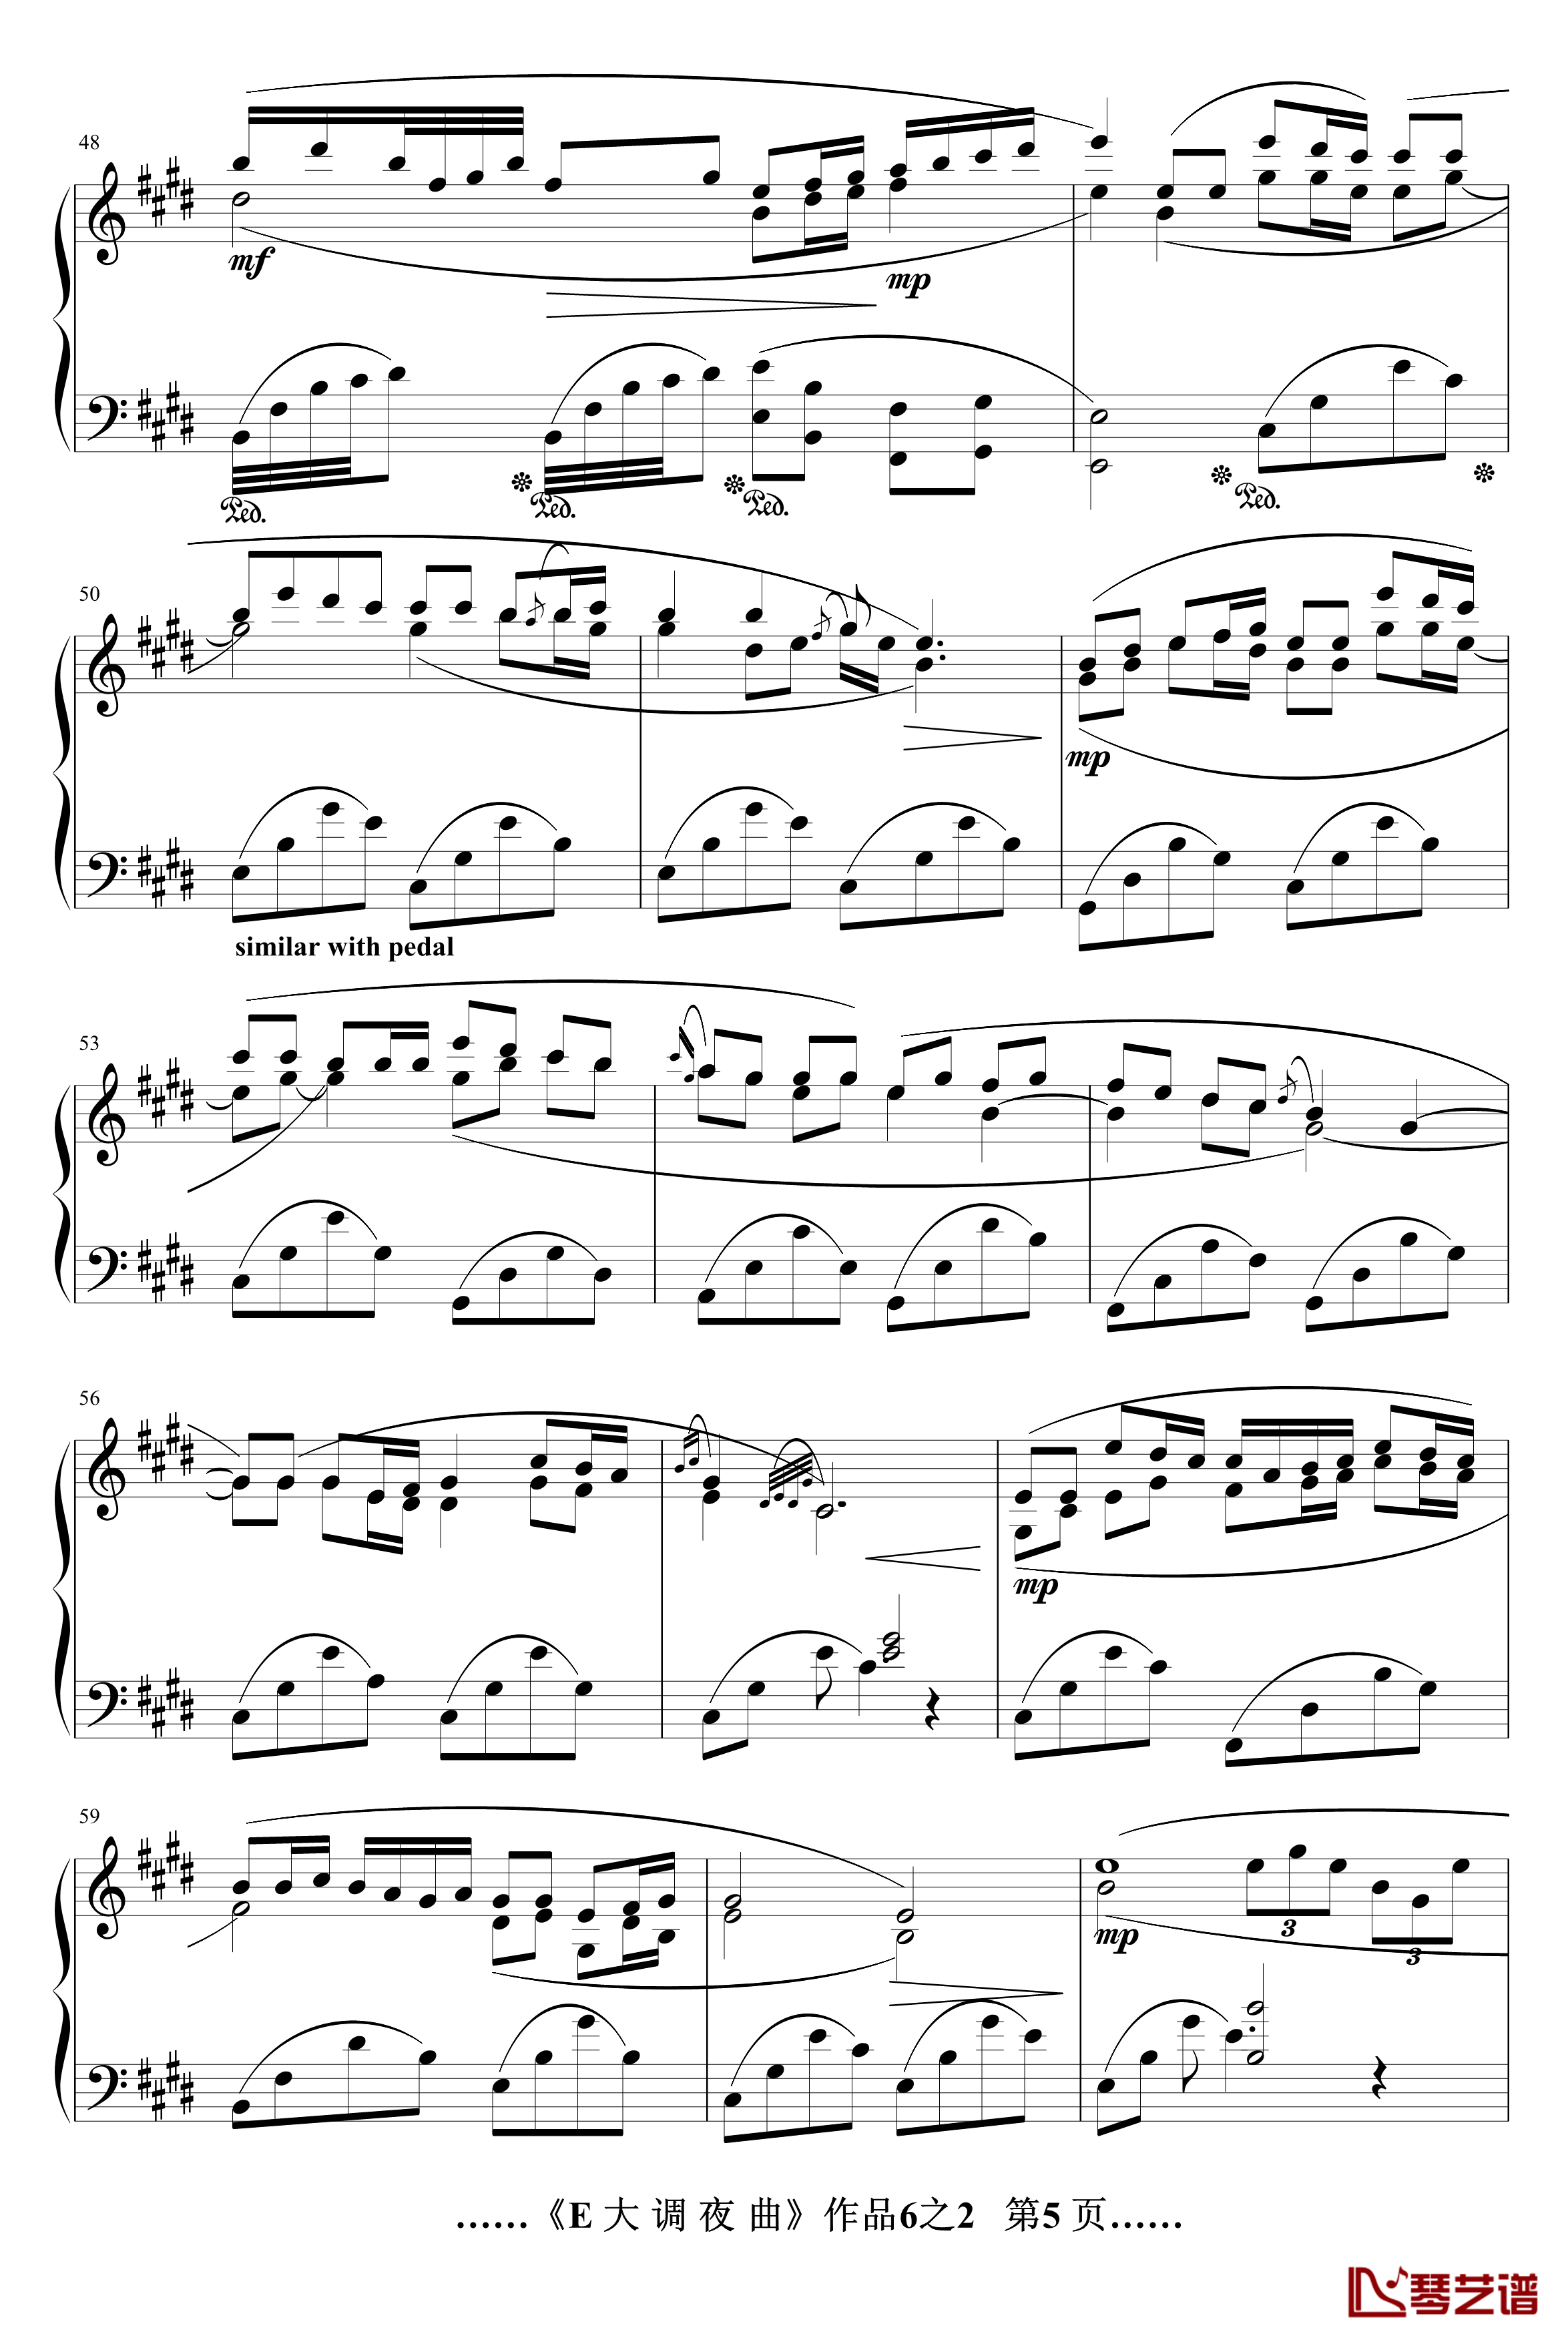 E大调夜曲op6.2钢琴谱-080810-jerry5743